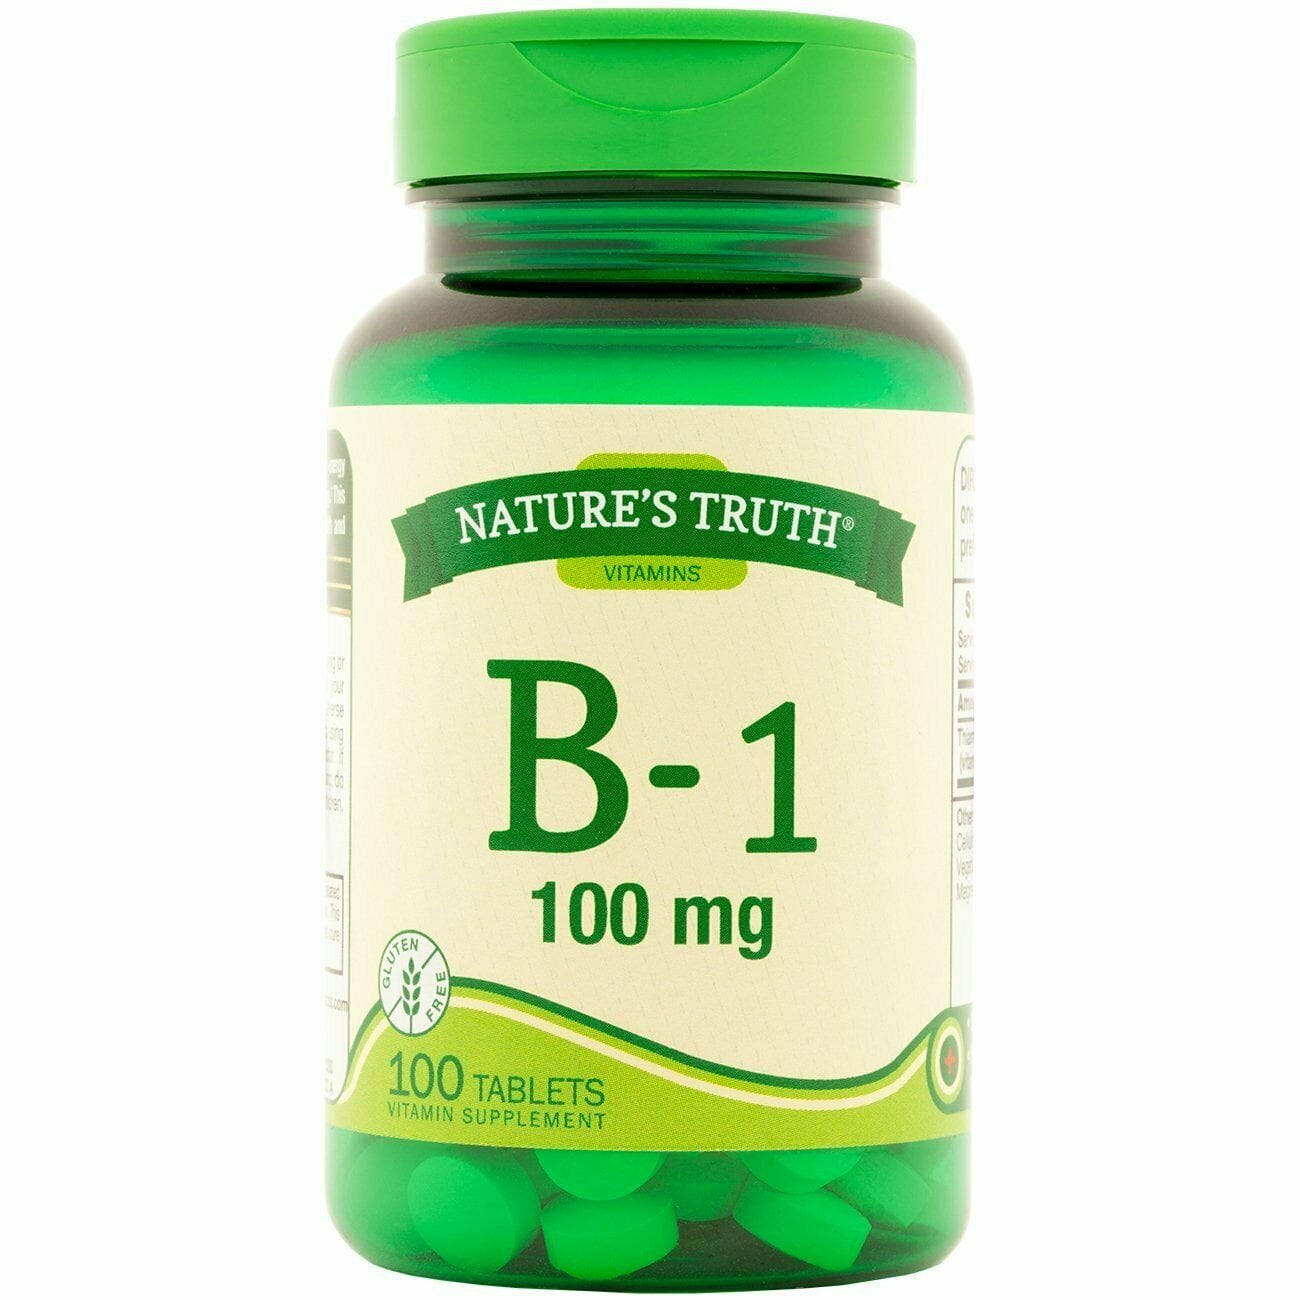 Nature's Truth Vitamins B-1 100 mg - Energy Metabolism - 100 ct - 3 Pack